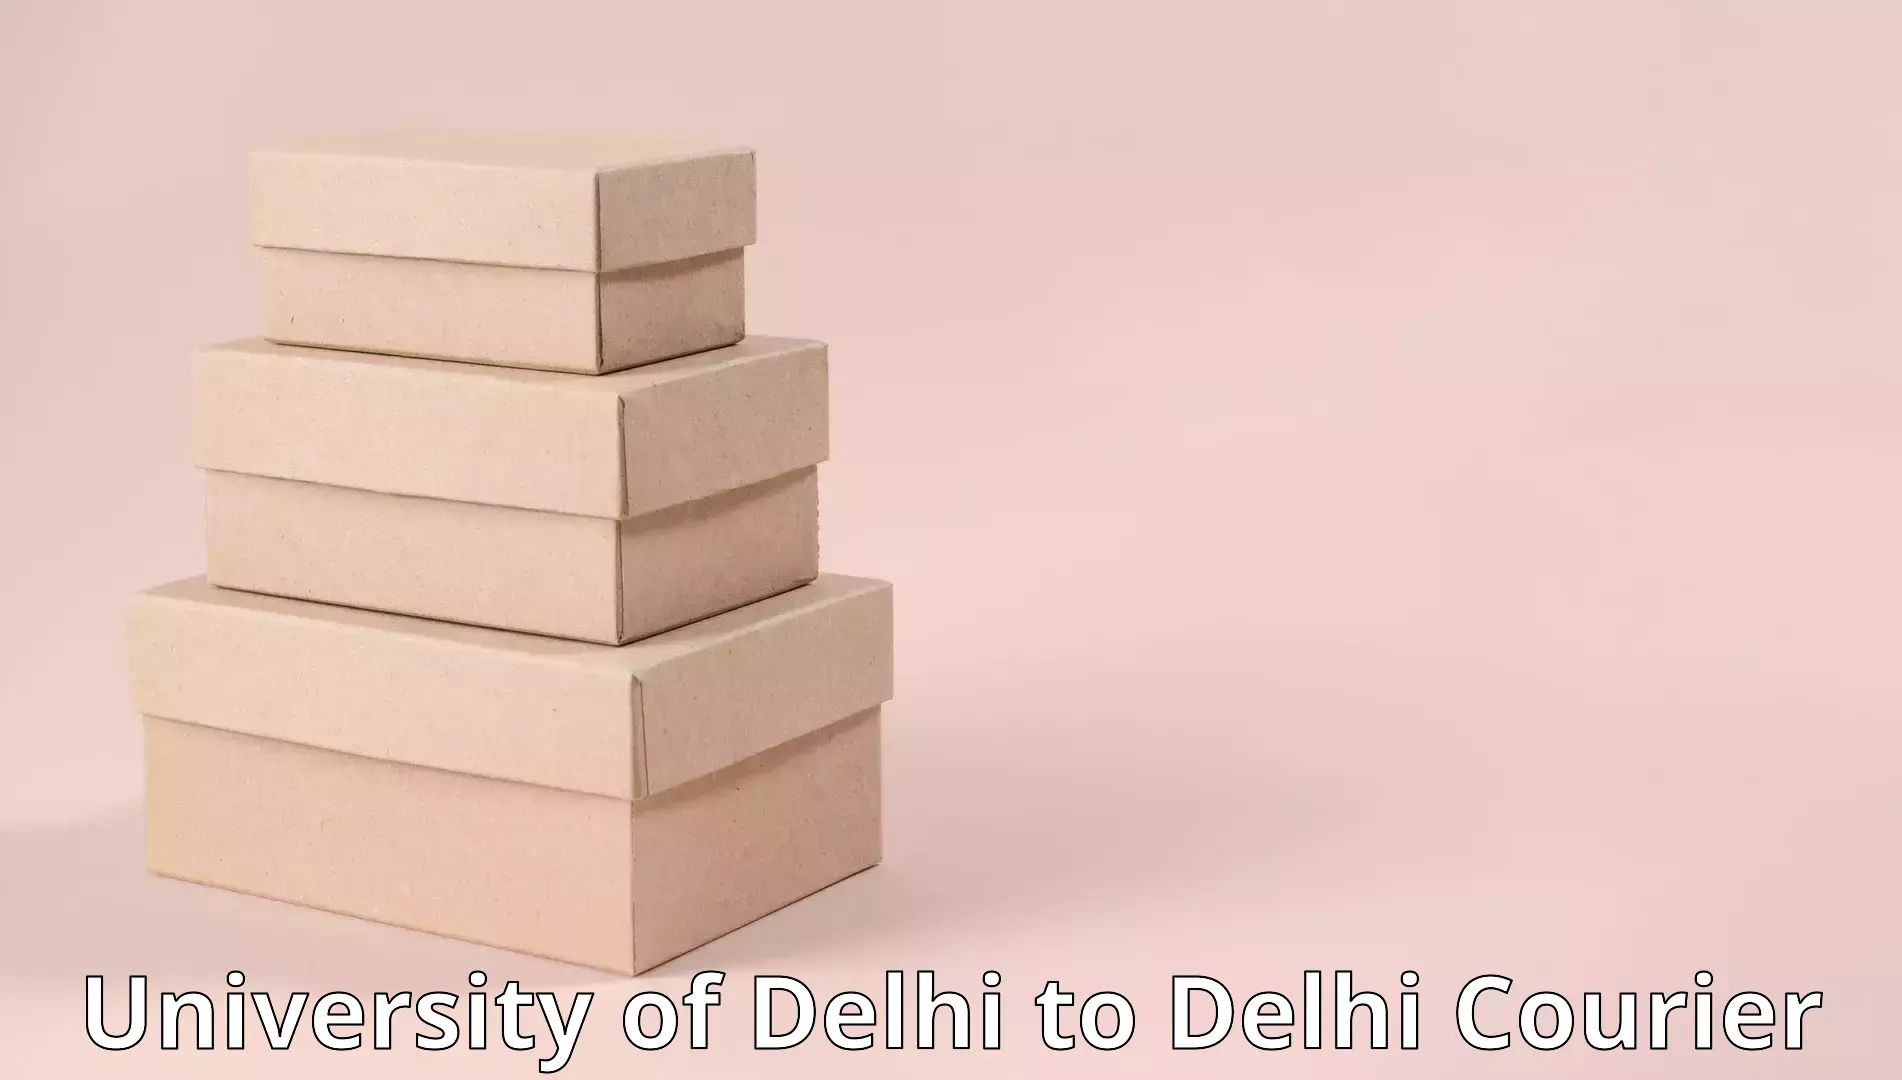 Quality relocation assistance University of Delhi to University of Delhi